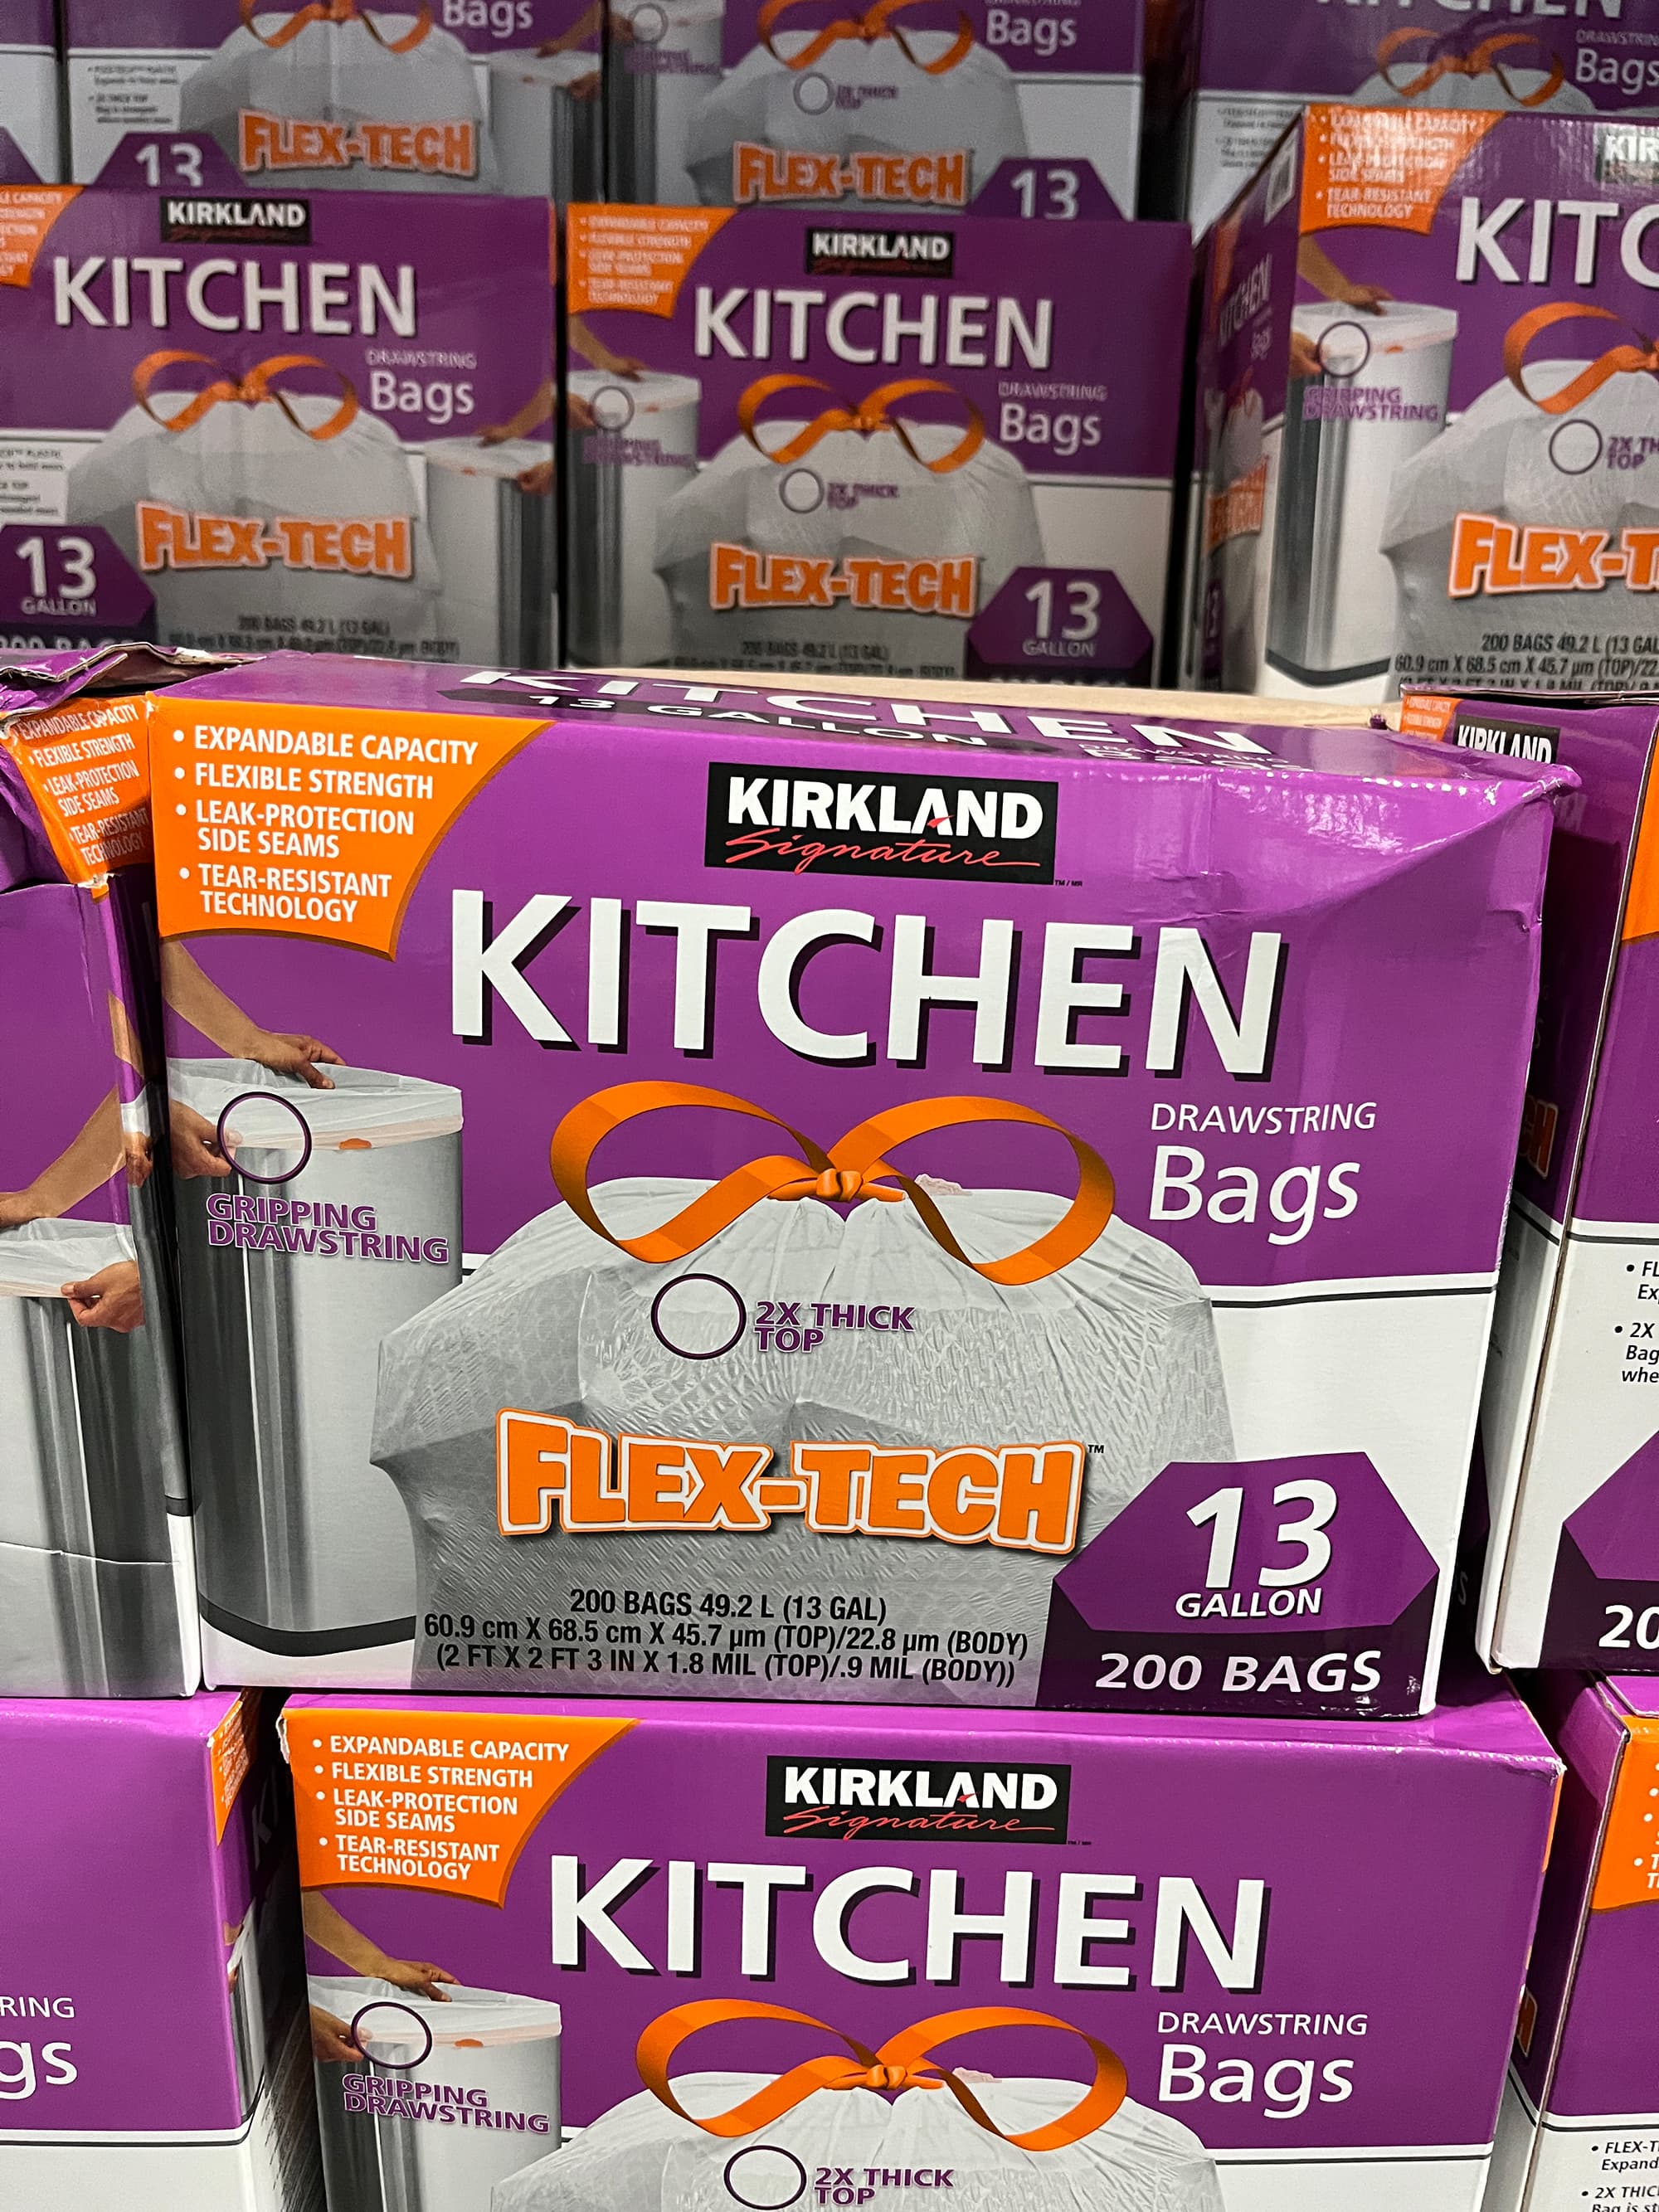 Kirkland Signature Flex-Tech 13-Gallon Kitchen Trash Bag, 200